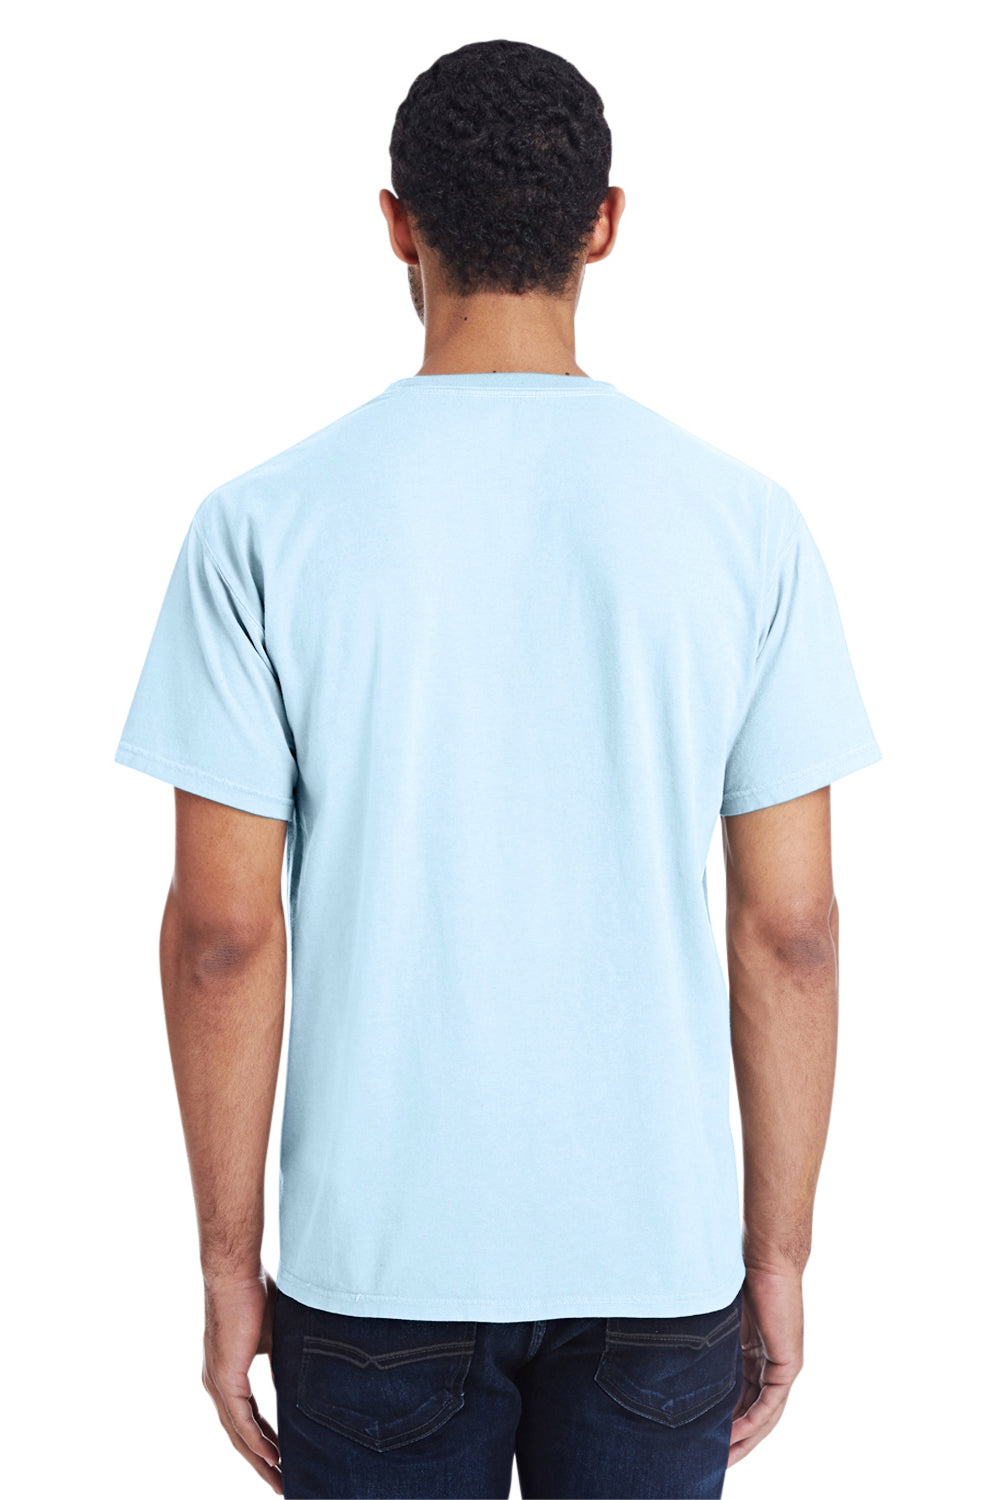 ComfortWash By Hanes GDH150 Mens Short Sleeve Crewneck T-Shirt w/ Pocket Soothing Blue Back